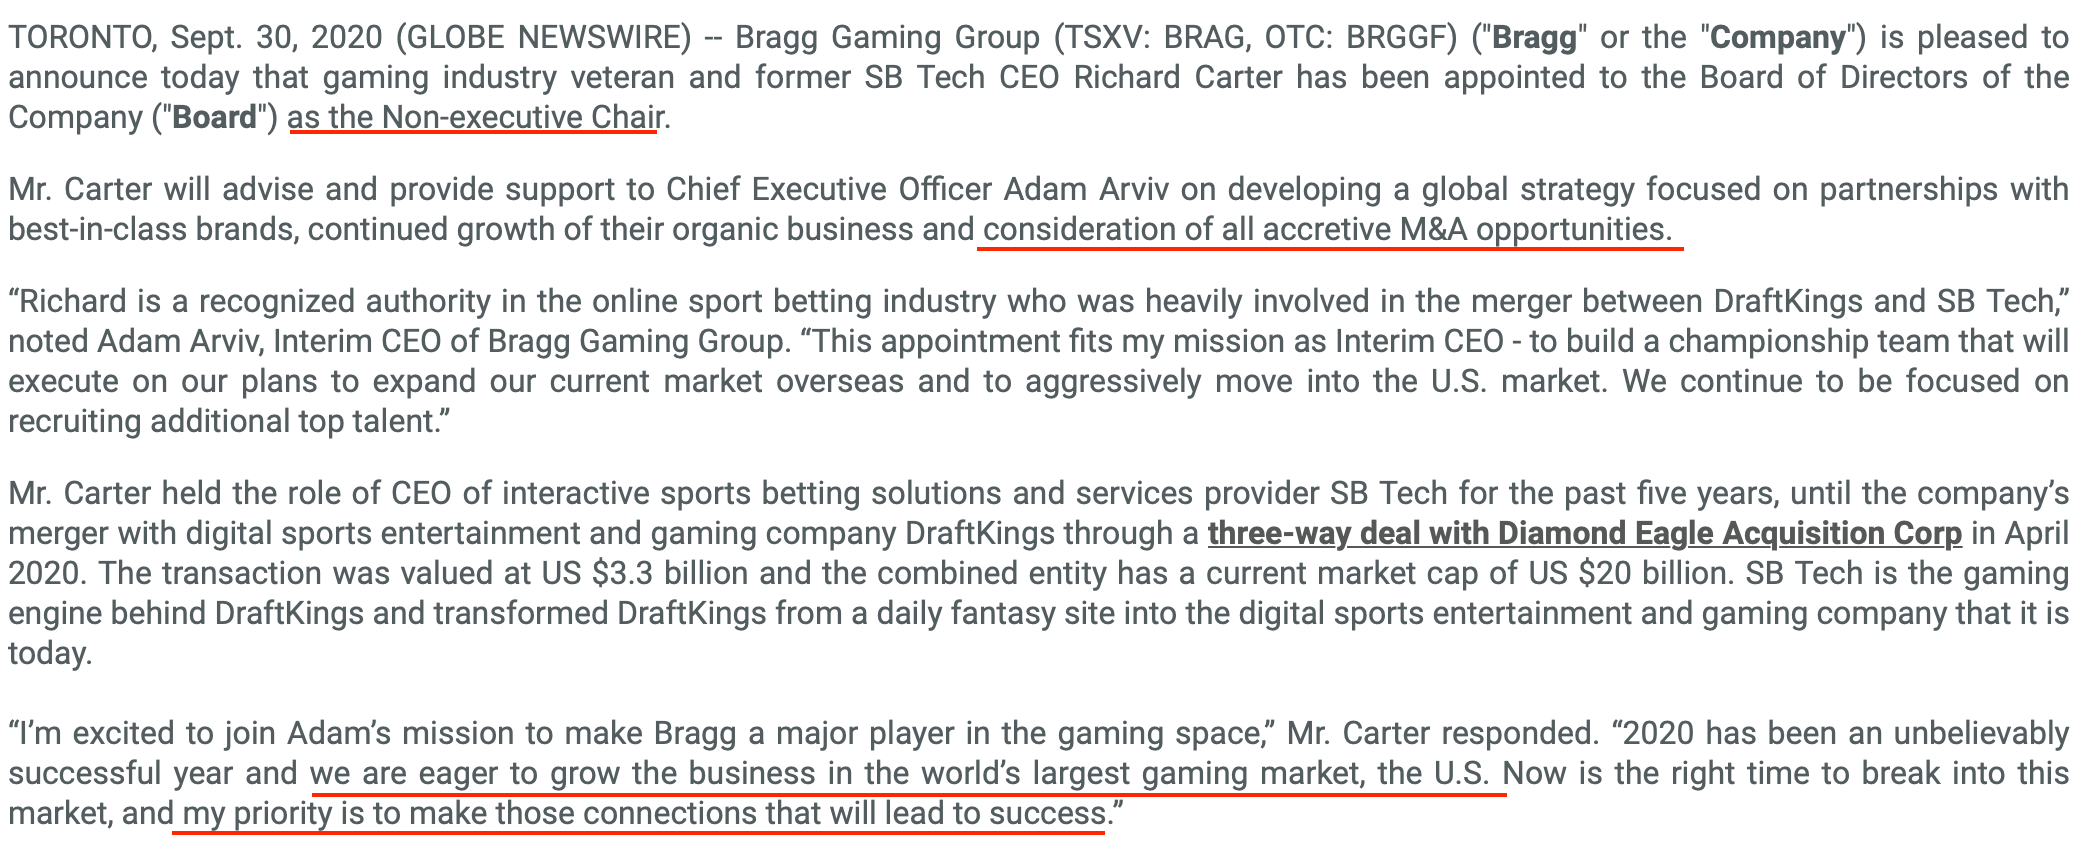 Bragg Gaming Group Inc. (BRAG) Company Profile & Overview - Stock Analysis